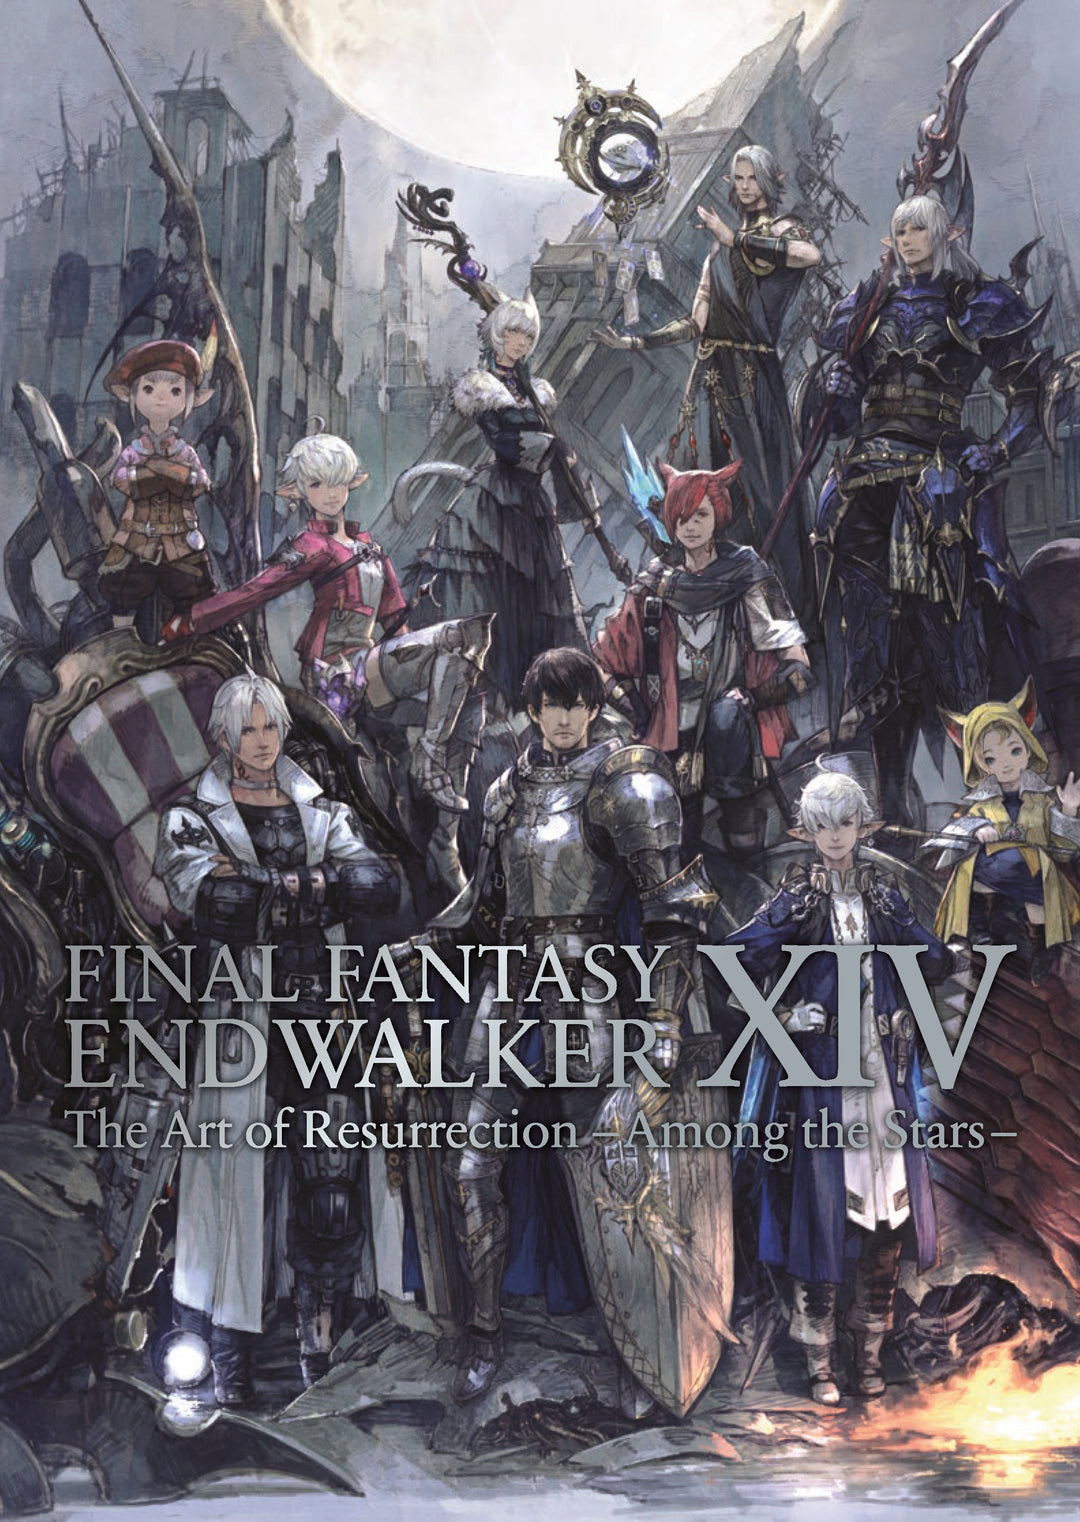 Final Fantasy XIV Endwalker -- The Art of Resurrection -Among the Stars-